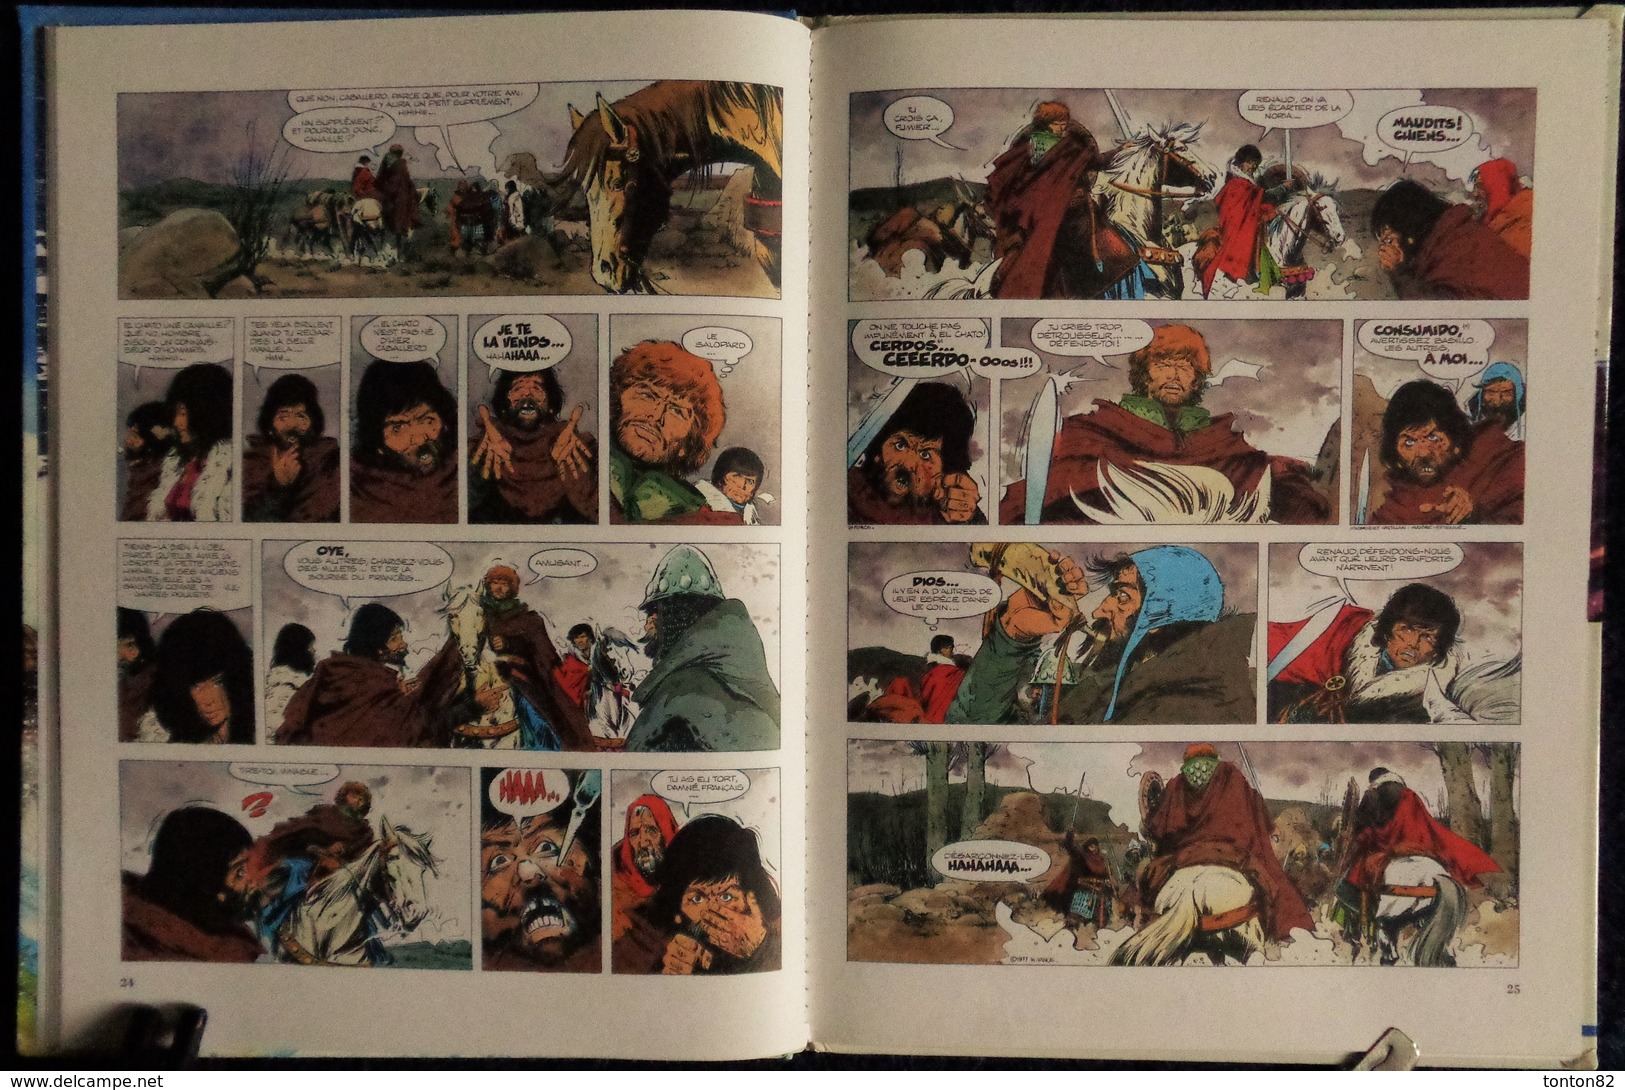 William Vance - RAMIRO - ( 7 ) - Ils étaient cinq - Éditions Dargaud - ( E.O. 1984 ) .